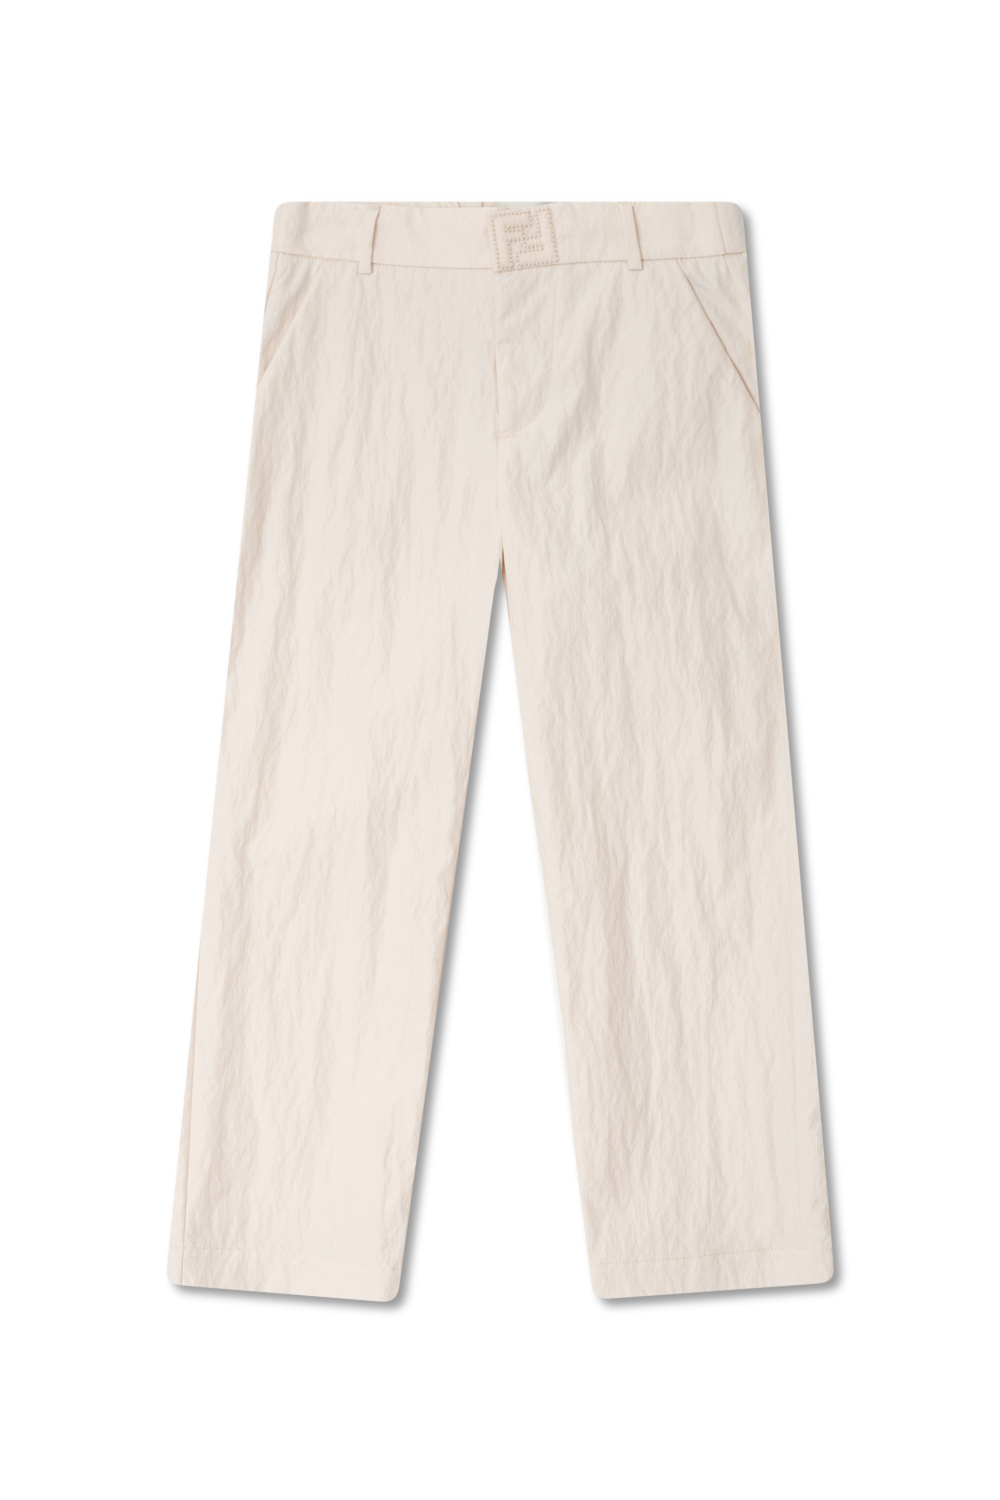 Fendi Kids Cotton And trousers